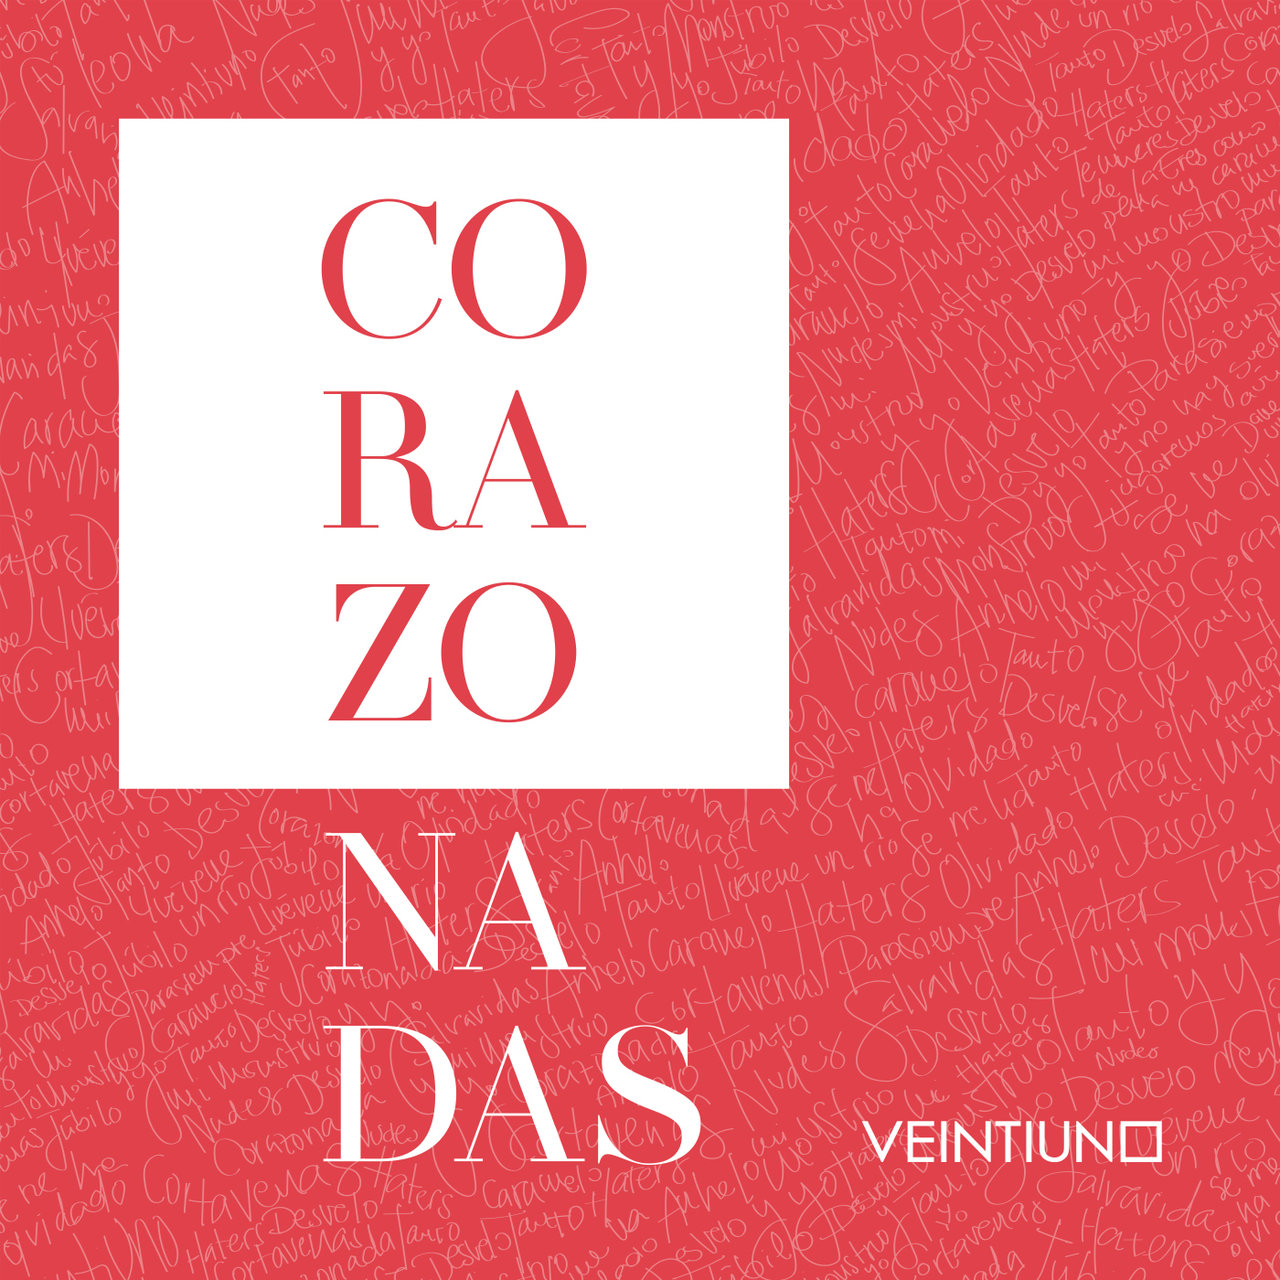 Veintiuno Corazonadas cover artwork